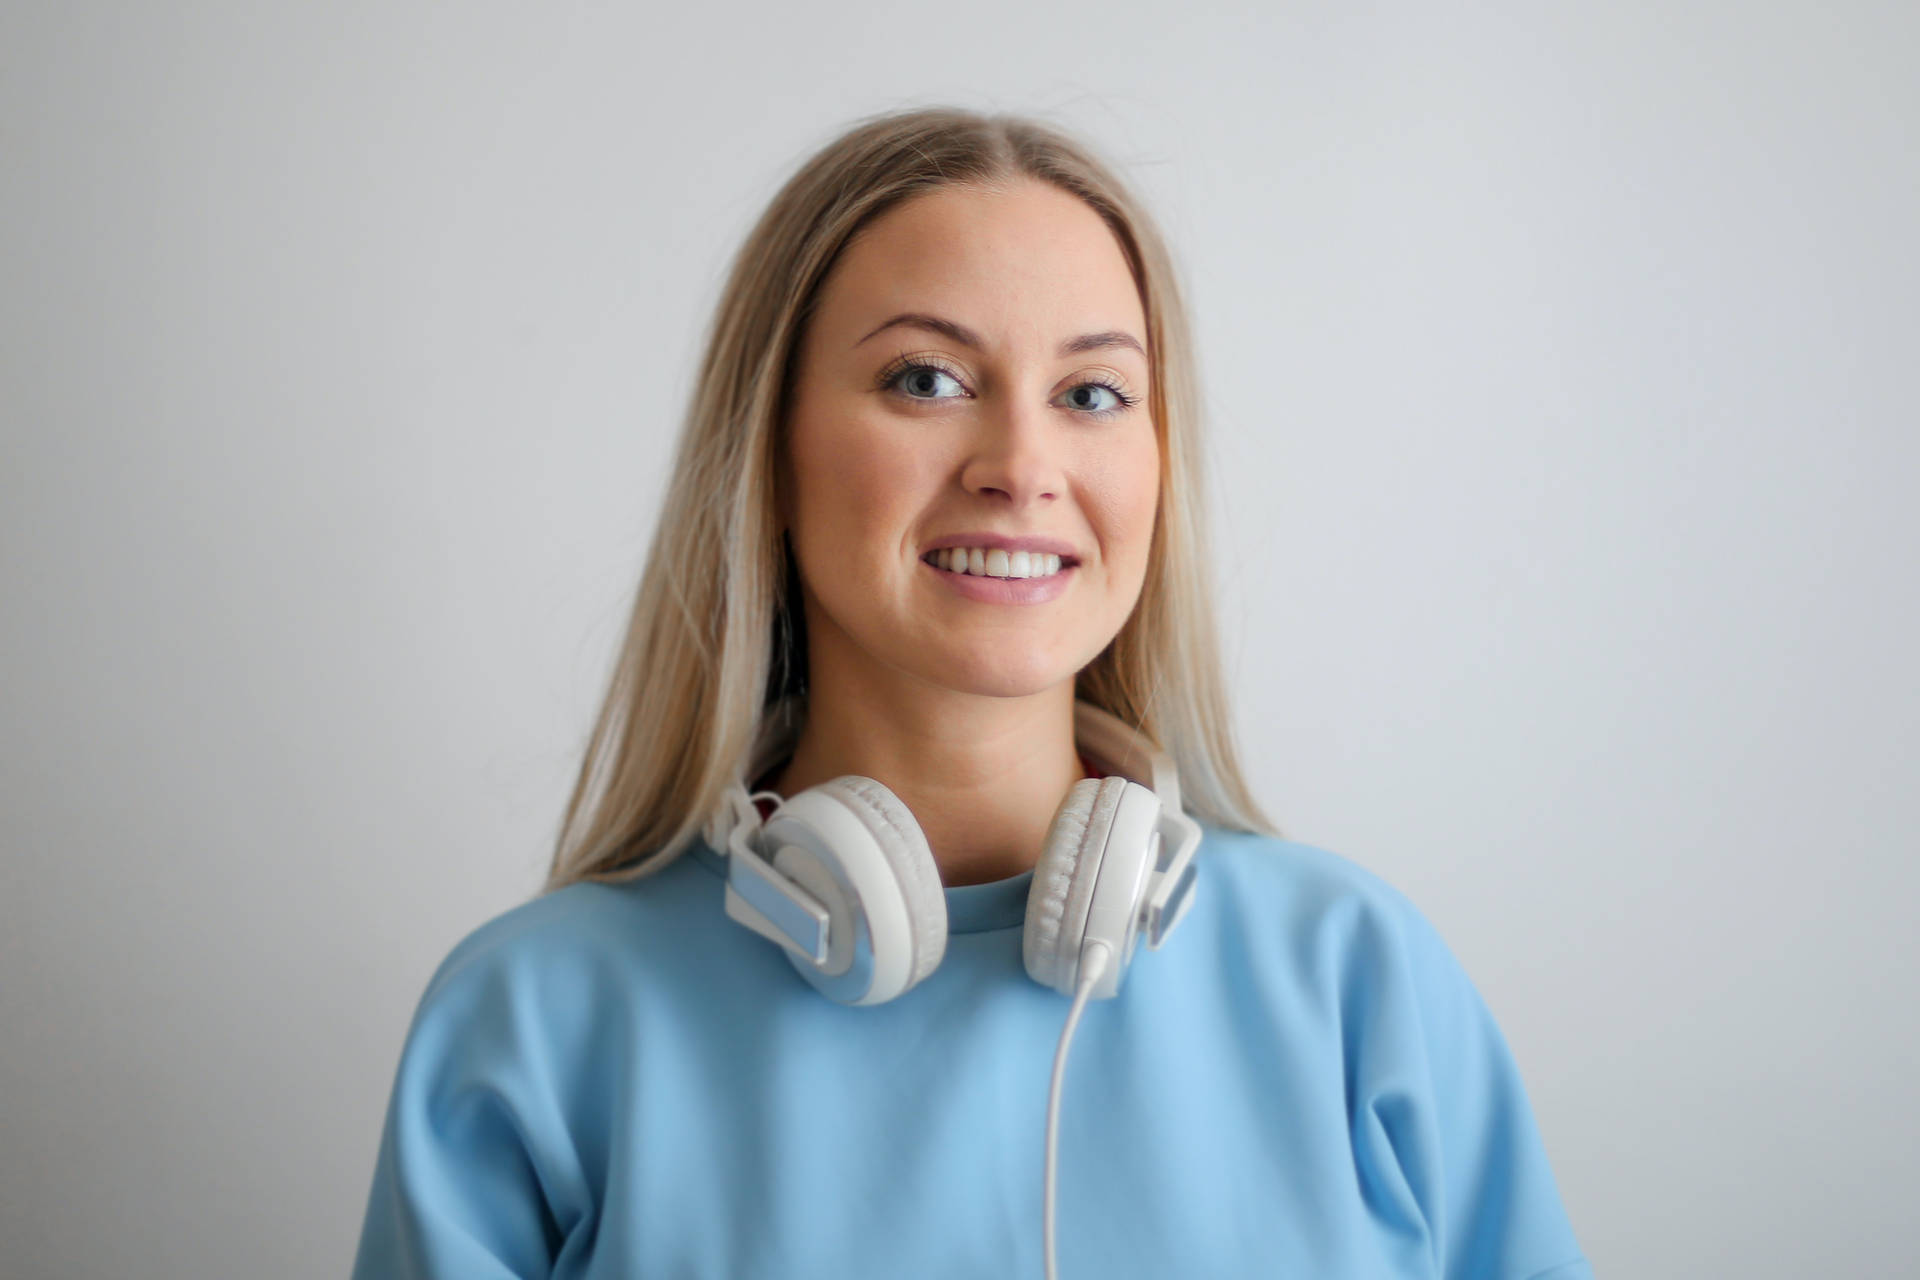 Headshot Of Girl Wearing Headphones And Blue Top Wallpaper